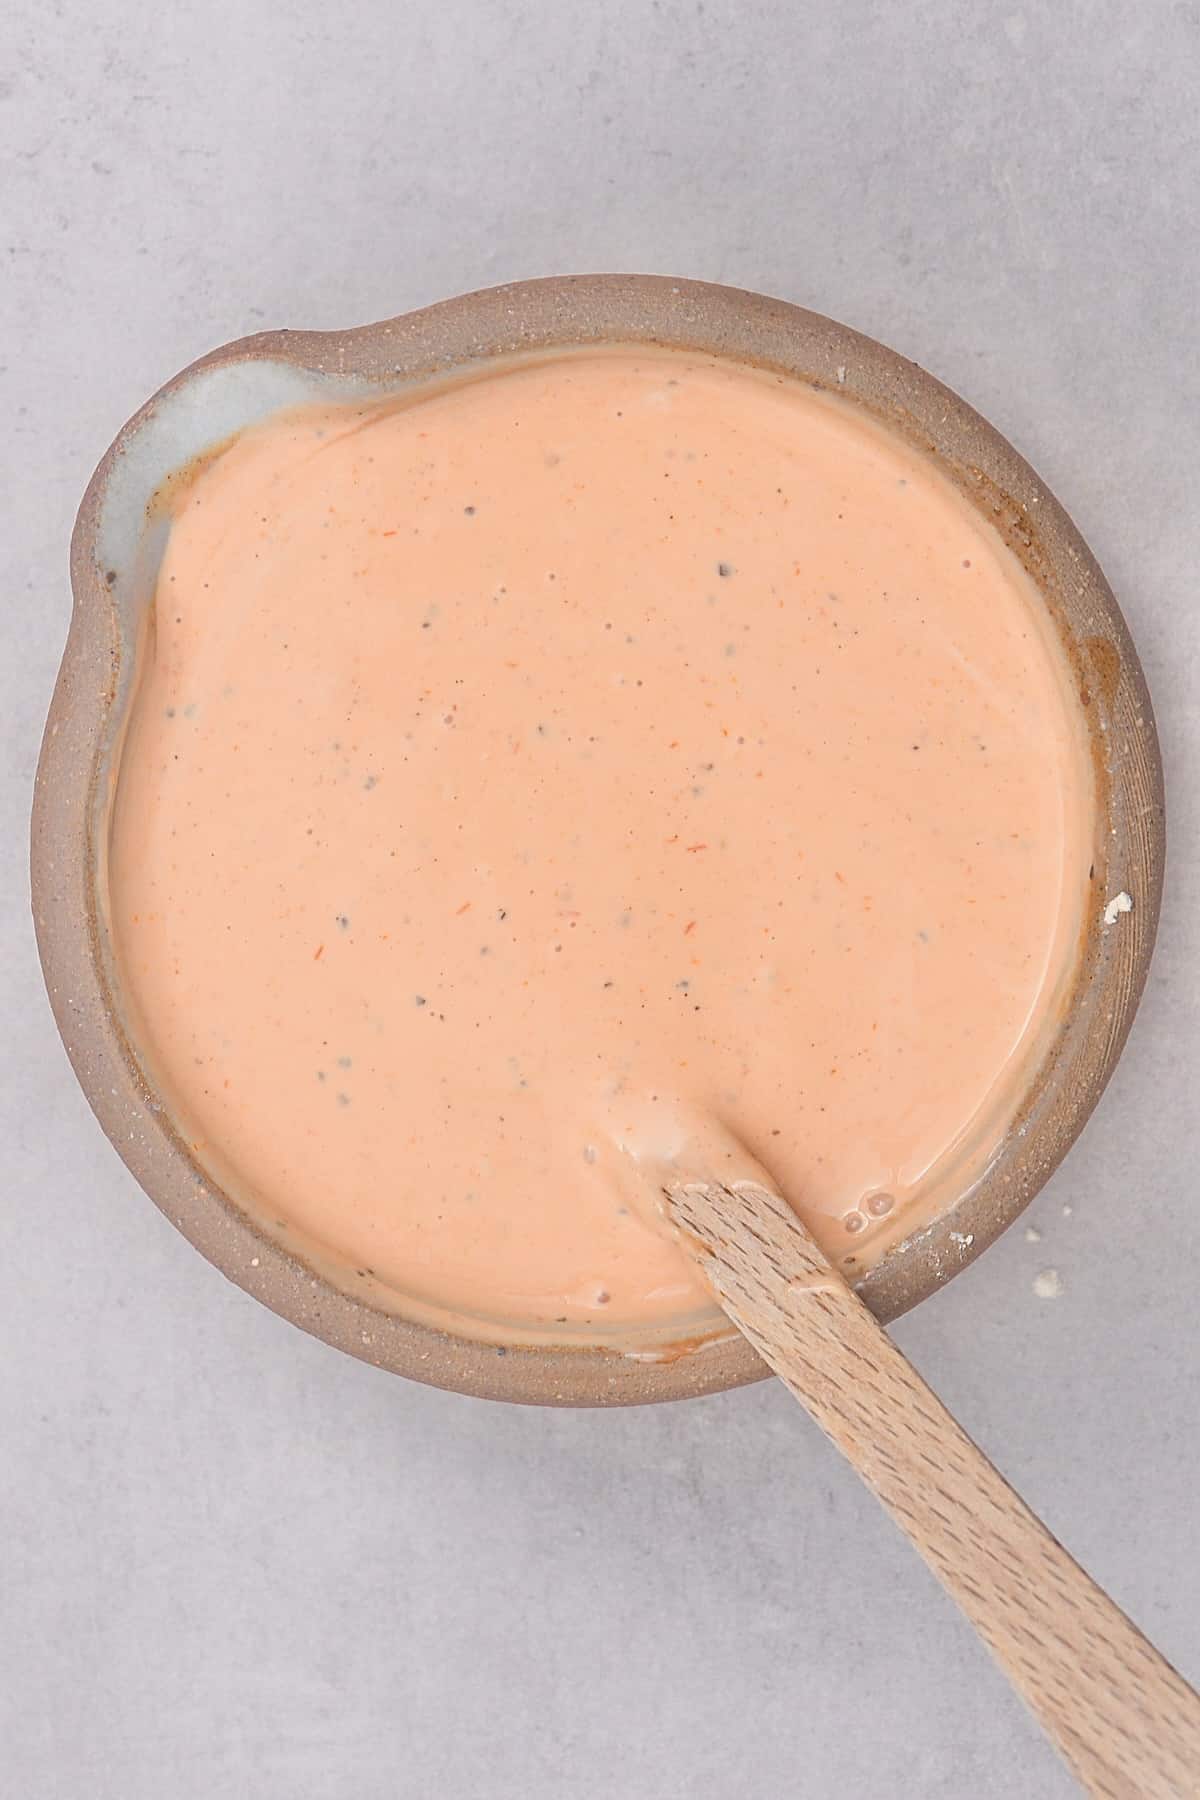 A bowl with homemade Raising Cane's sauce